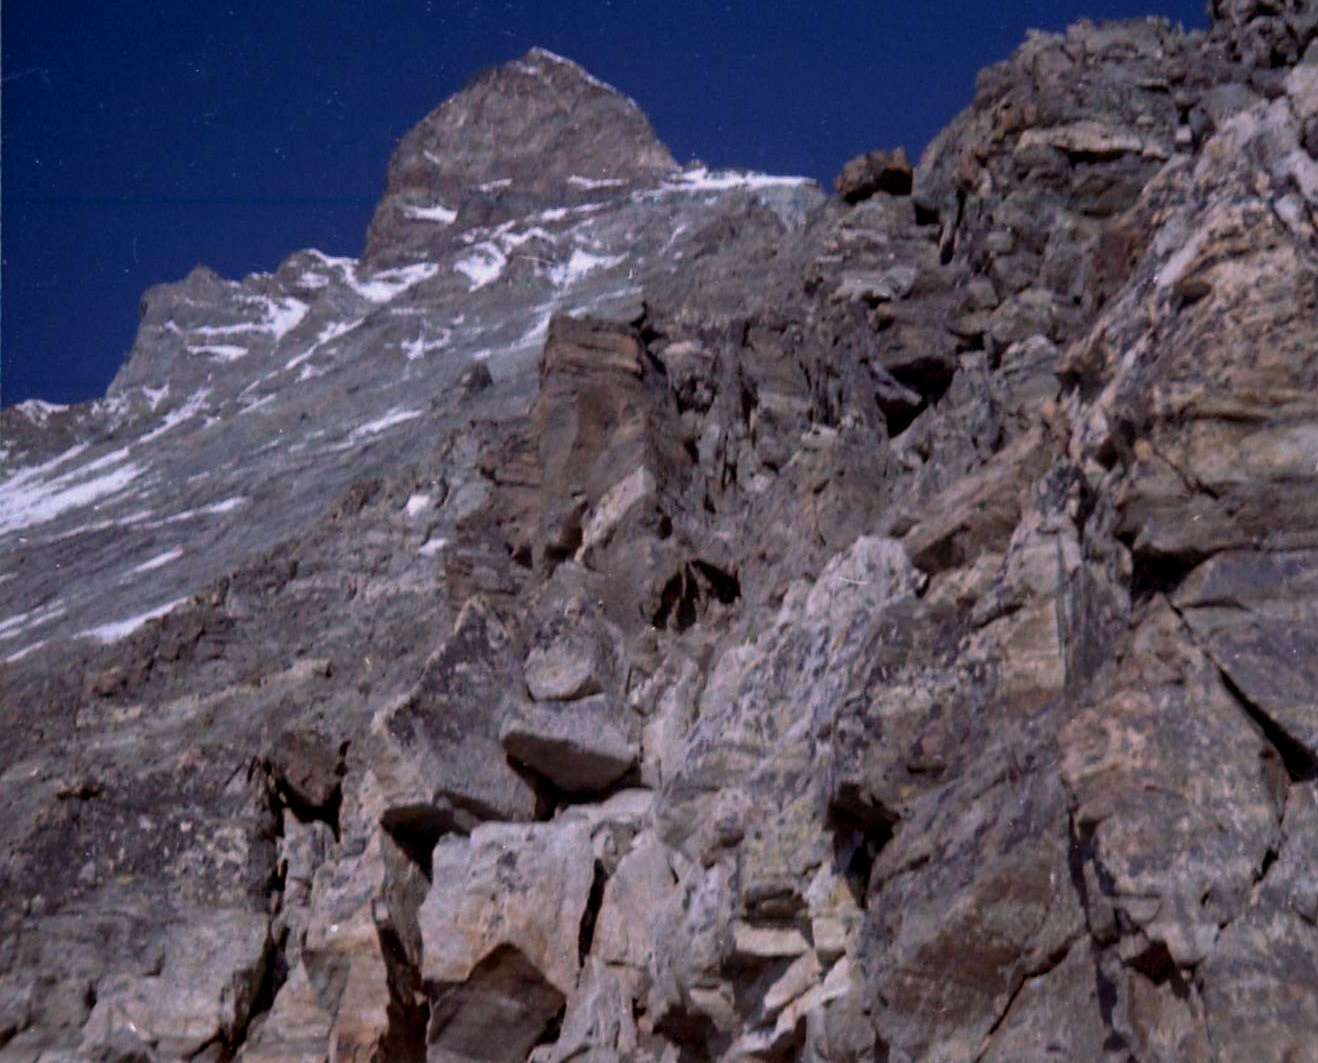 Matterhorn Summit from the Hornli Ridge ( normal route of ascent )